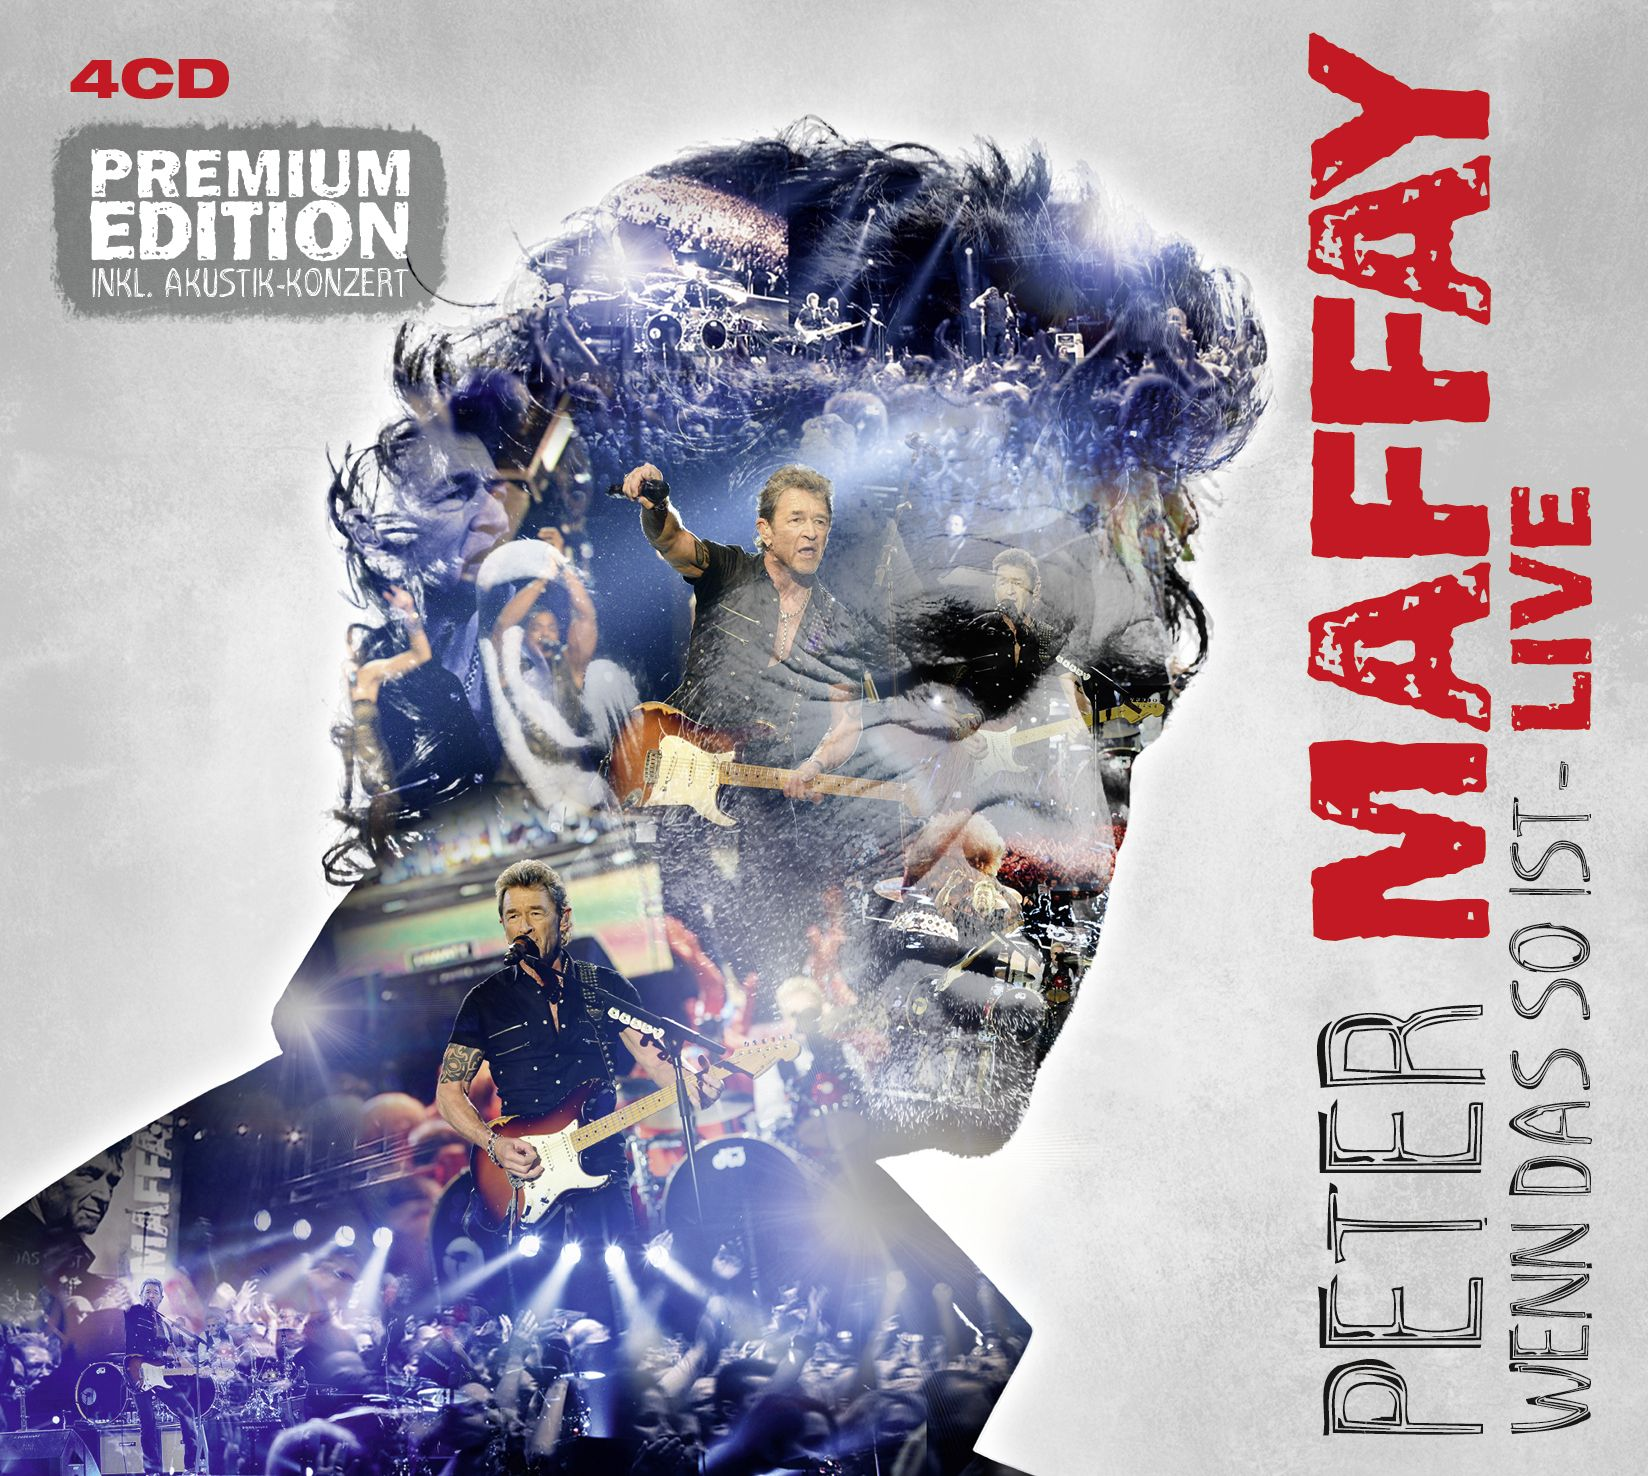 Peter Maffay - Wenn das inkl. Akustik-Konzert) (CD) so Edition (Premium ist-LIVE 